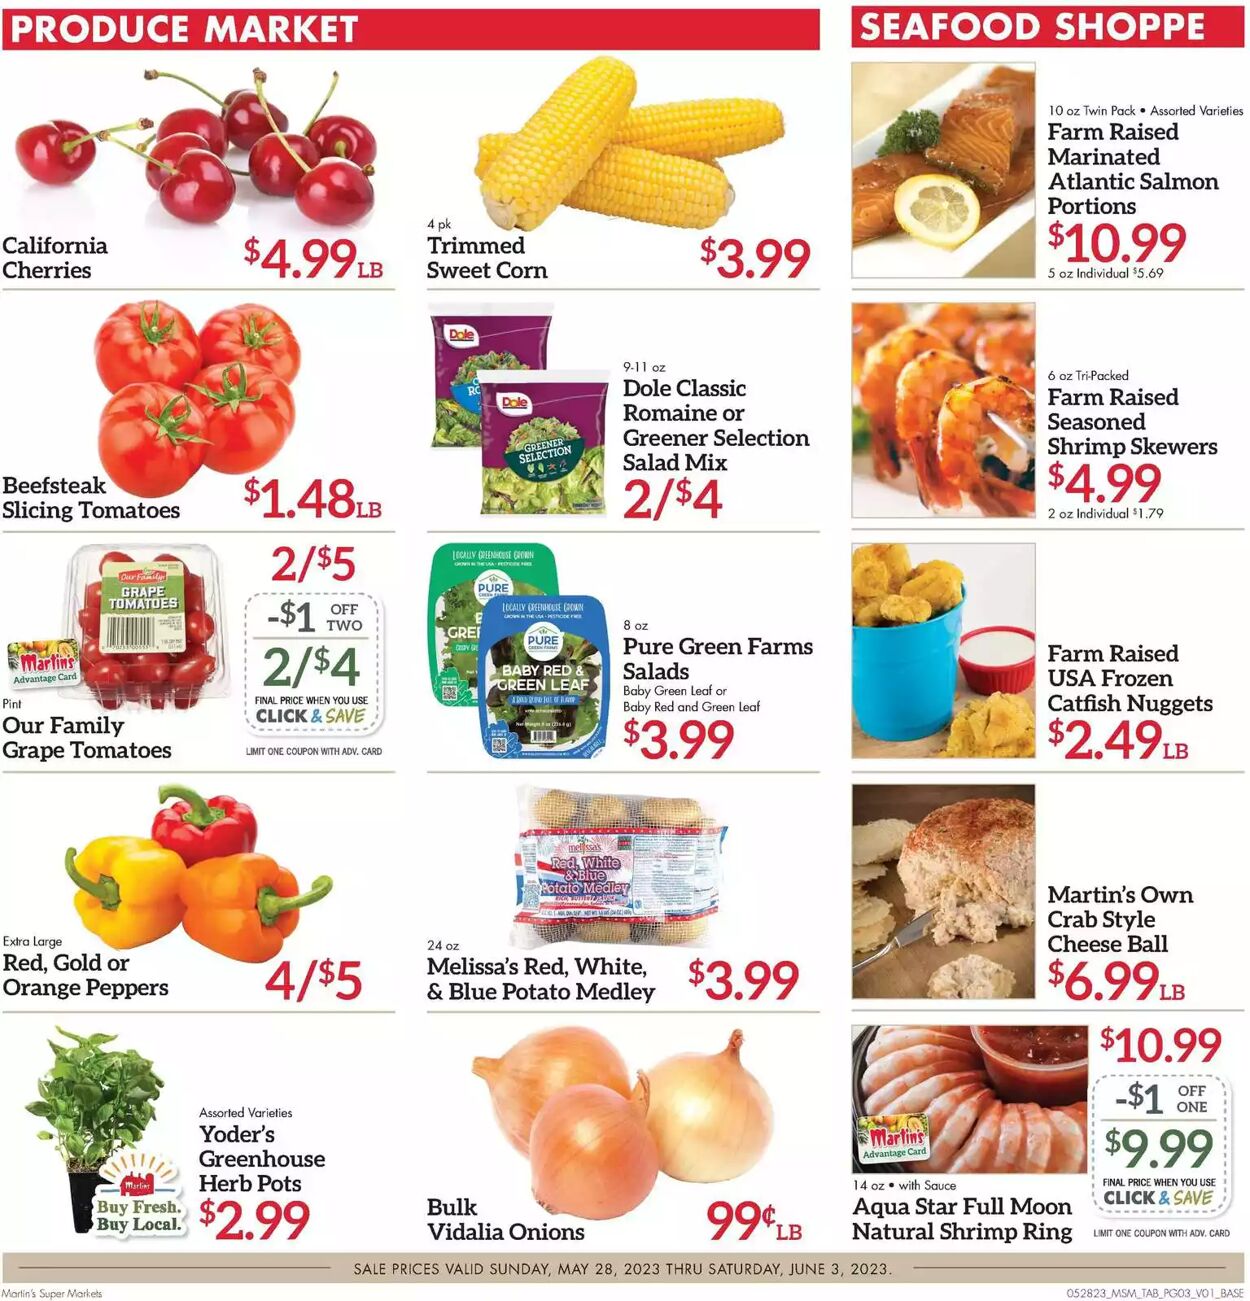 Weekly ad Martin's Supermarkets 05/28/2023 - 06/03/2023